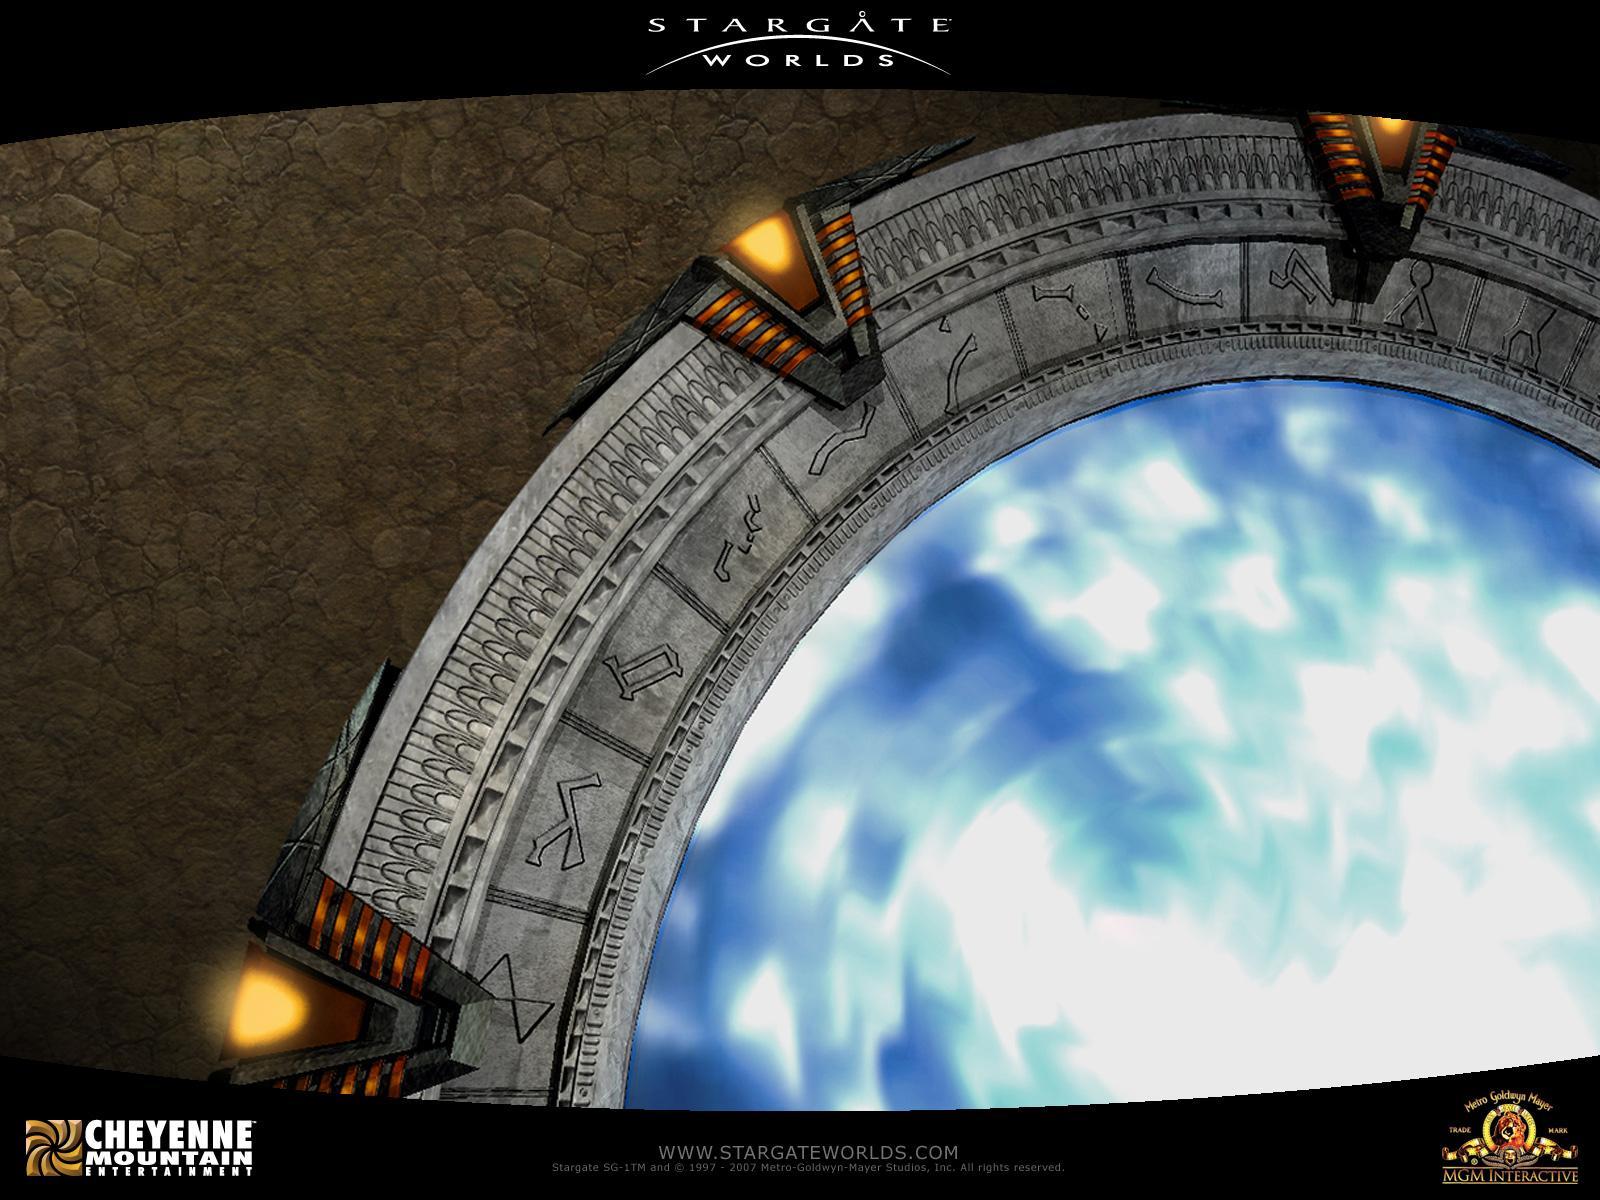 StarGate - Worlds - Stargate Wallpaper (27909882) - Fanpop